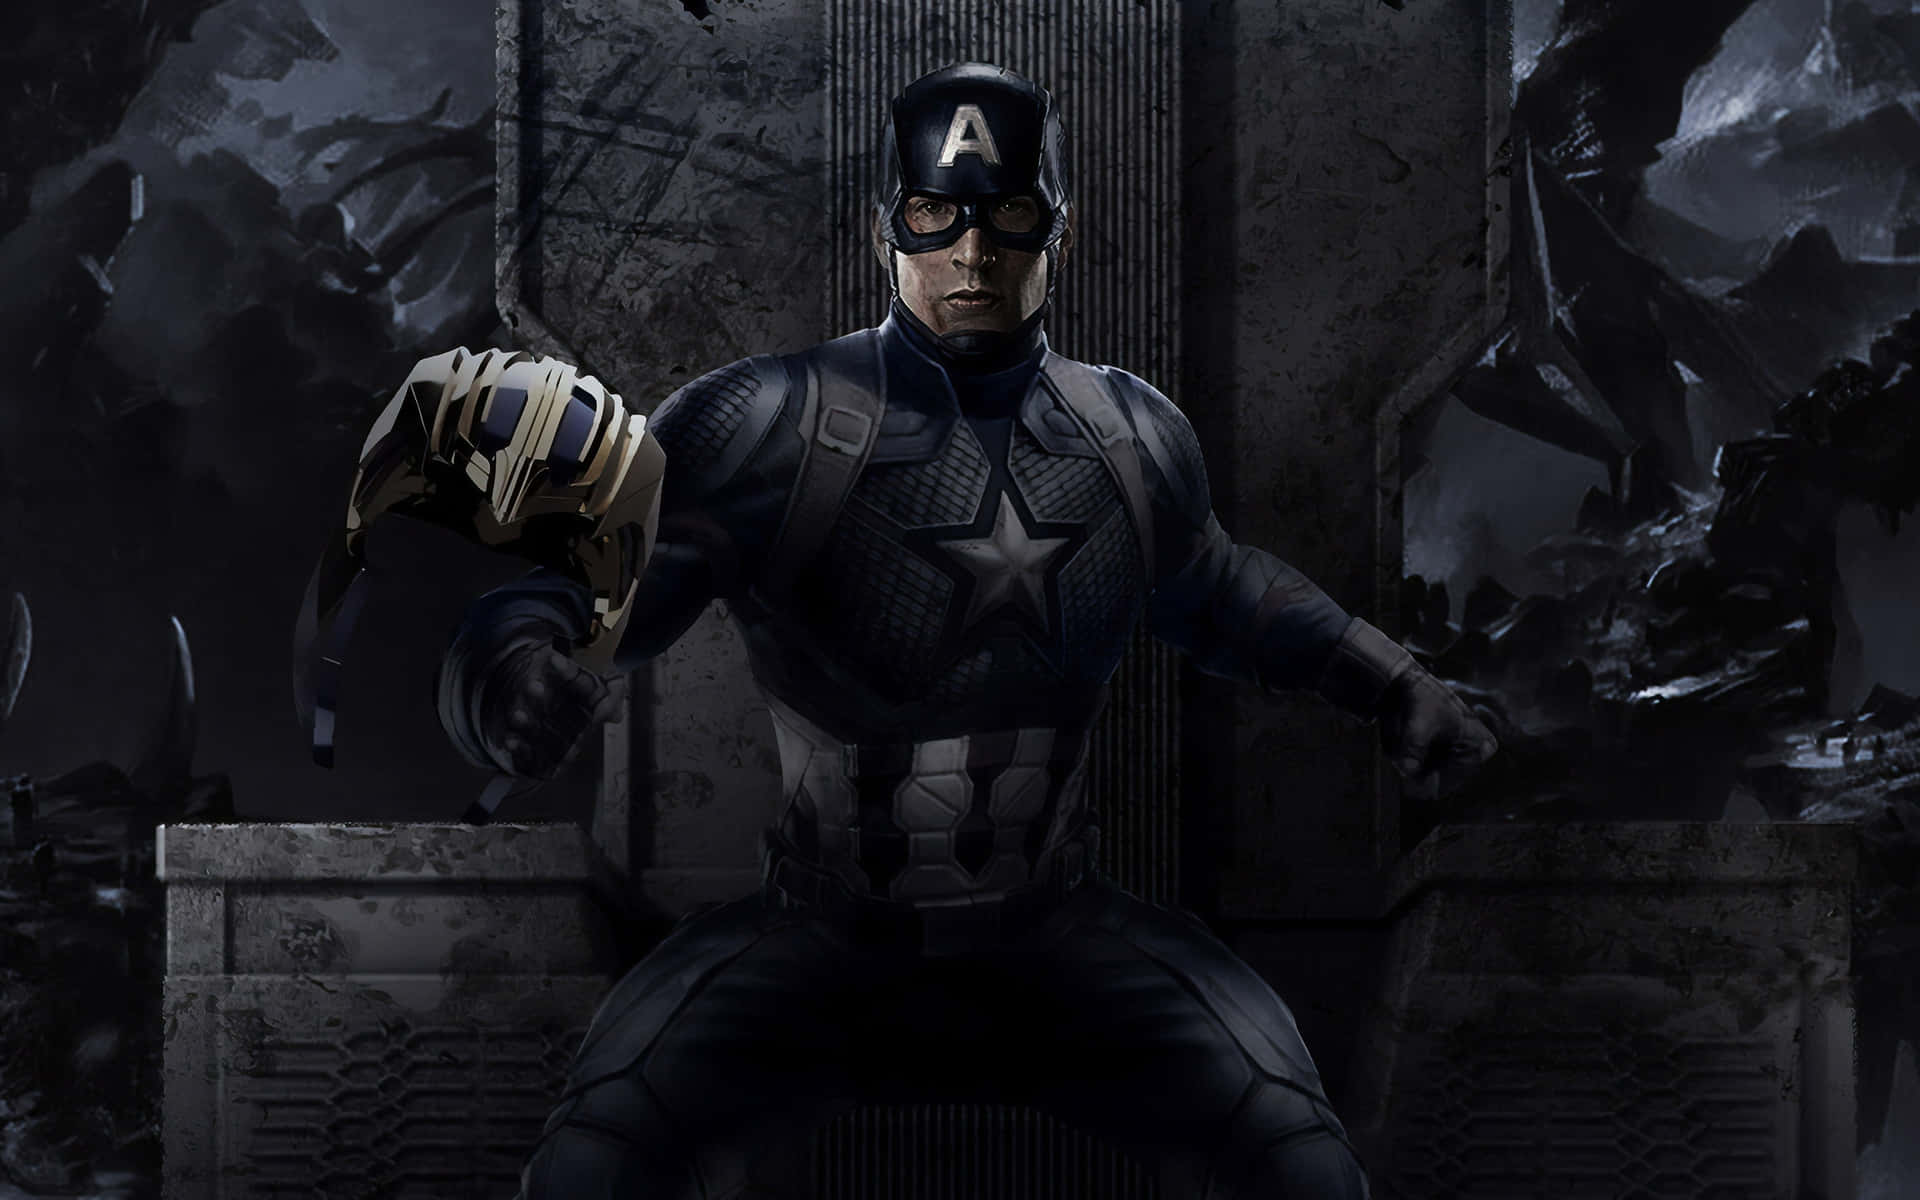 Captain America is ready for battle in the Endgame Wallpaper